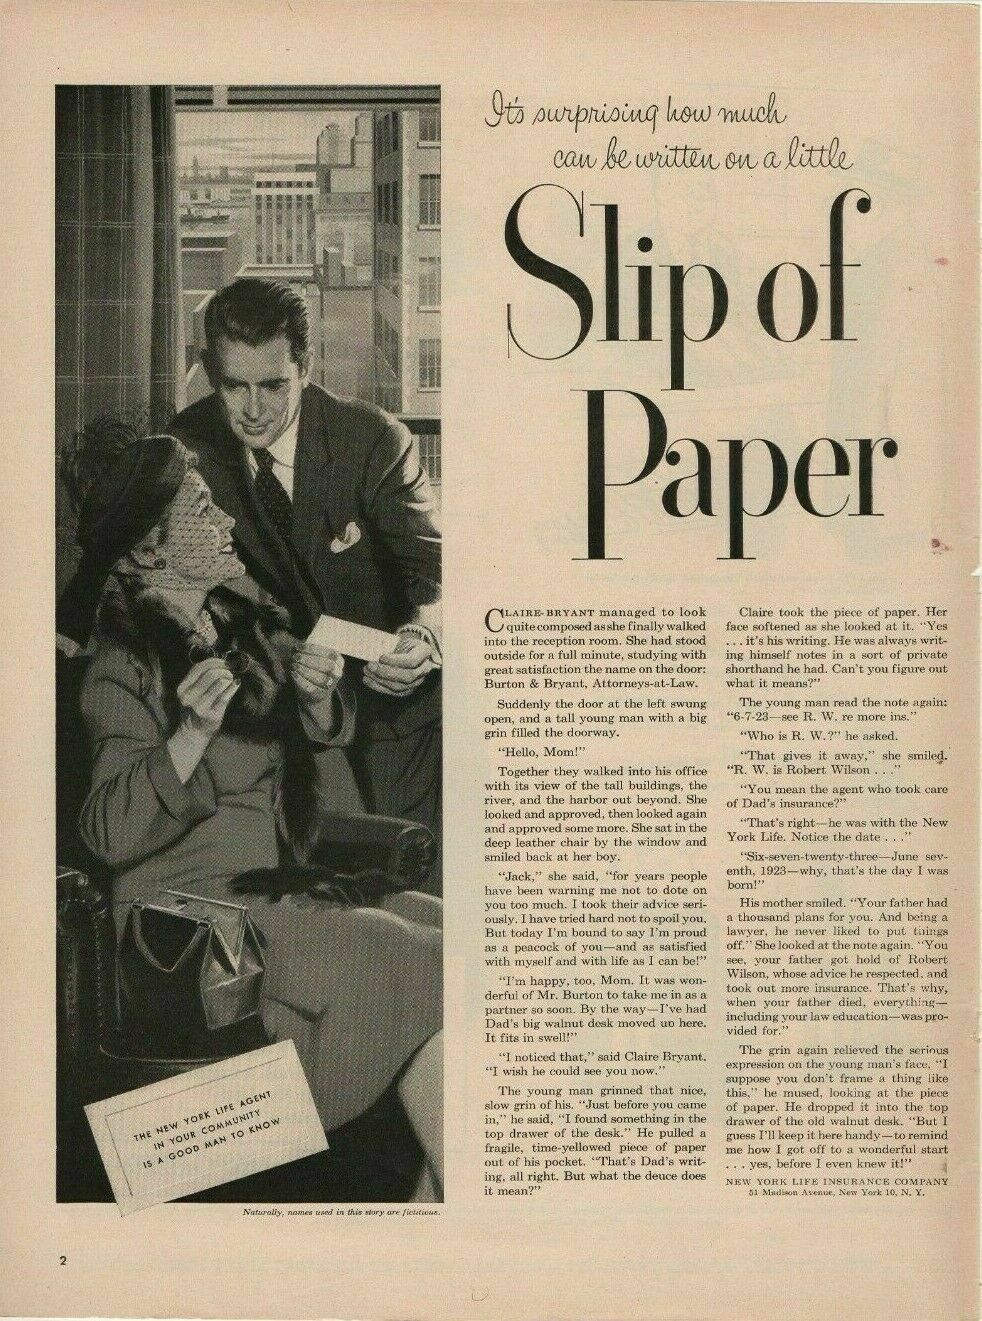 1951 Vintage Print Ad Advertising New York Life Insurance D8-d